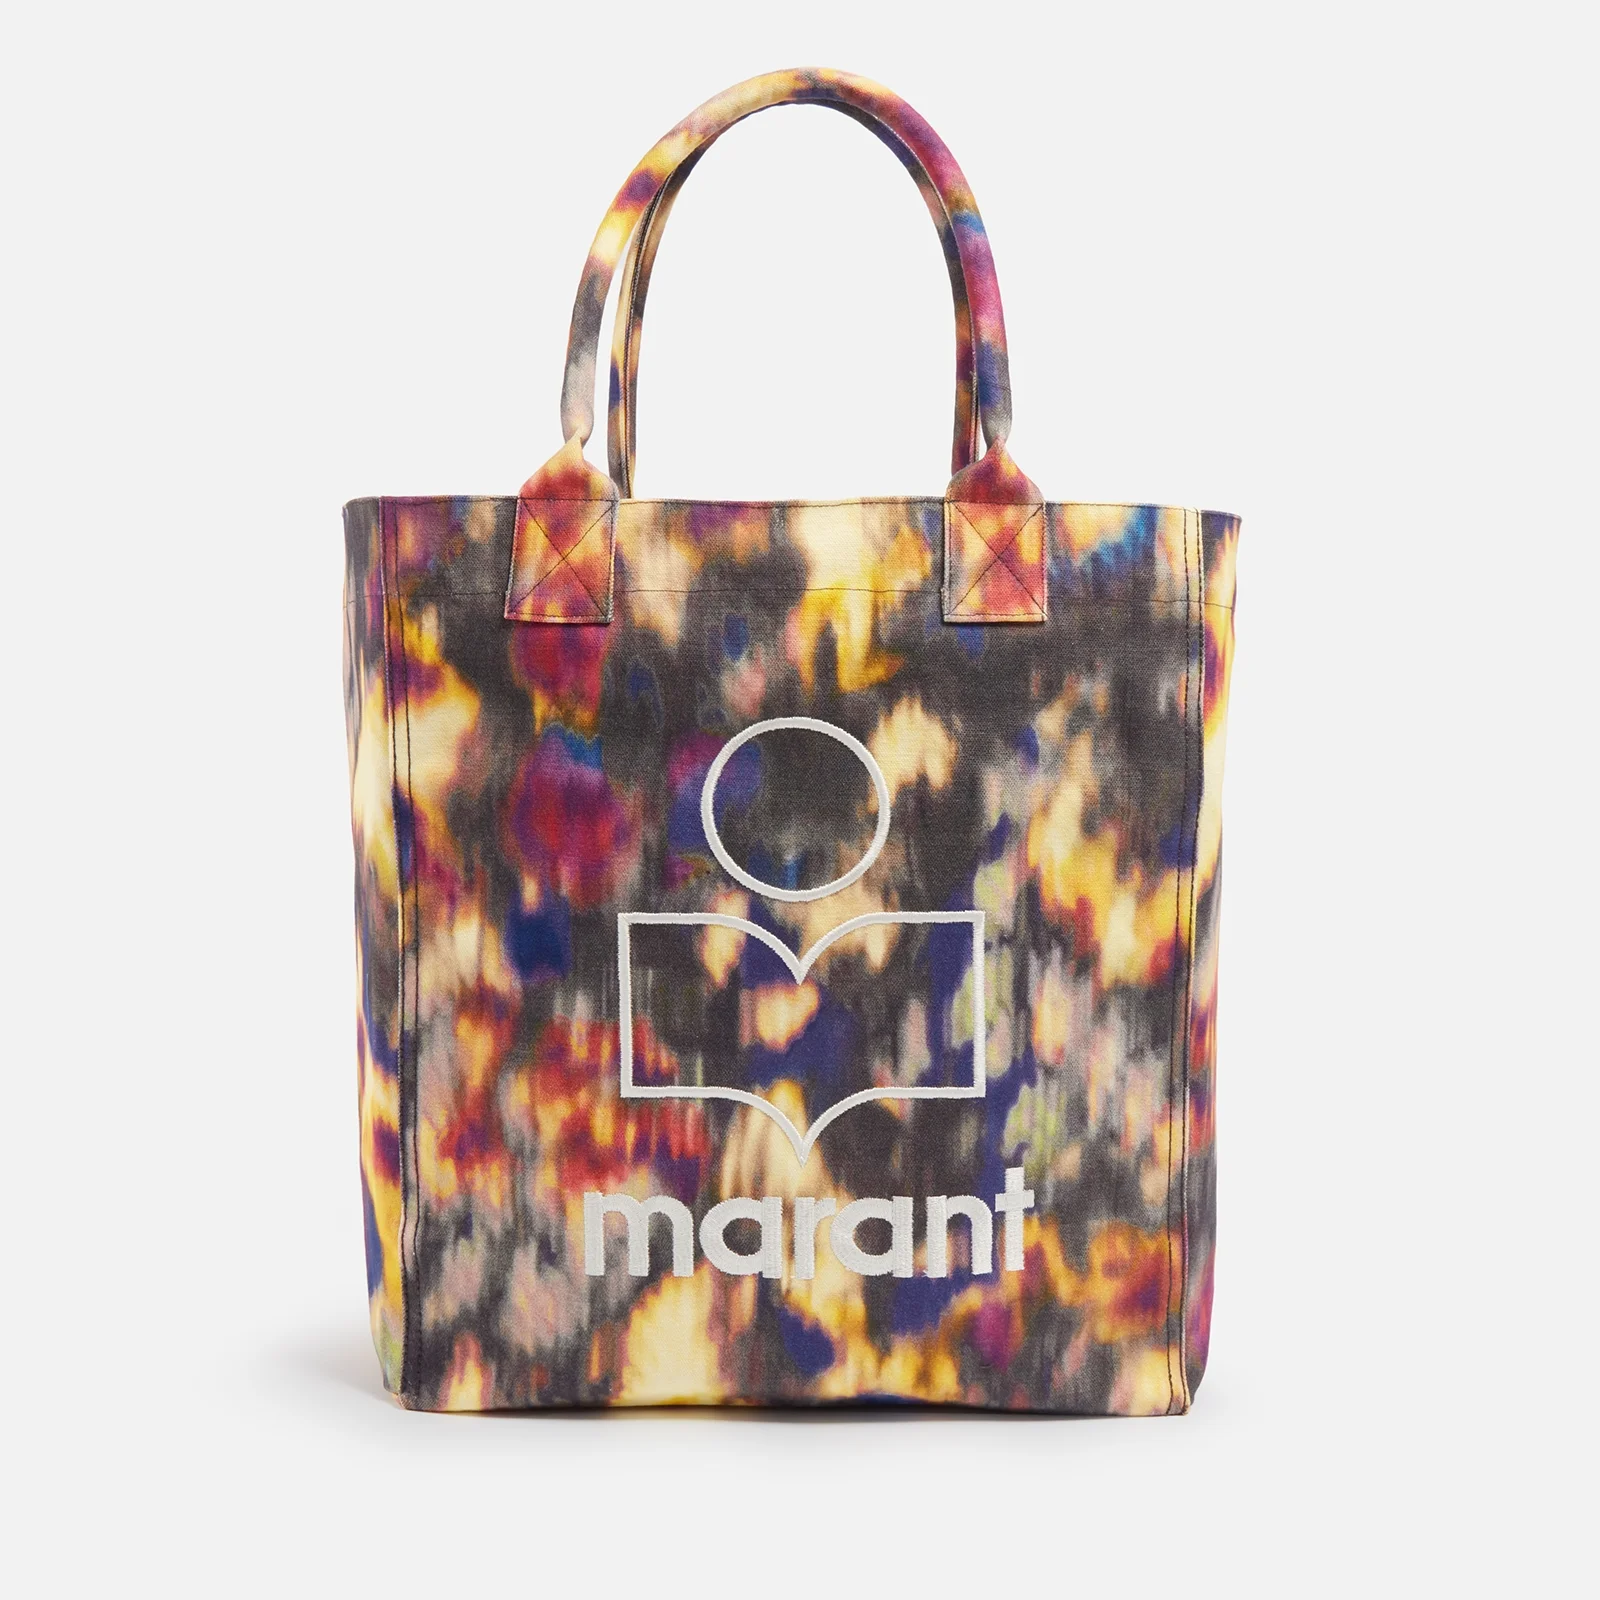 Isabel Marant Yenky Logo Cotton-Canvas Tote Bag Image 1